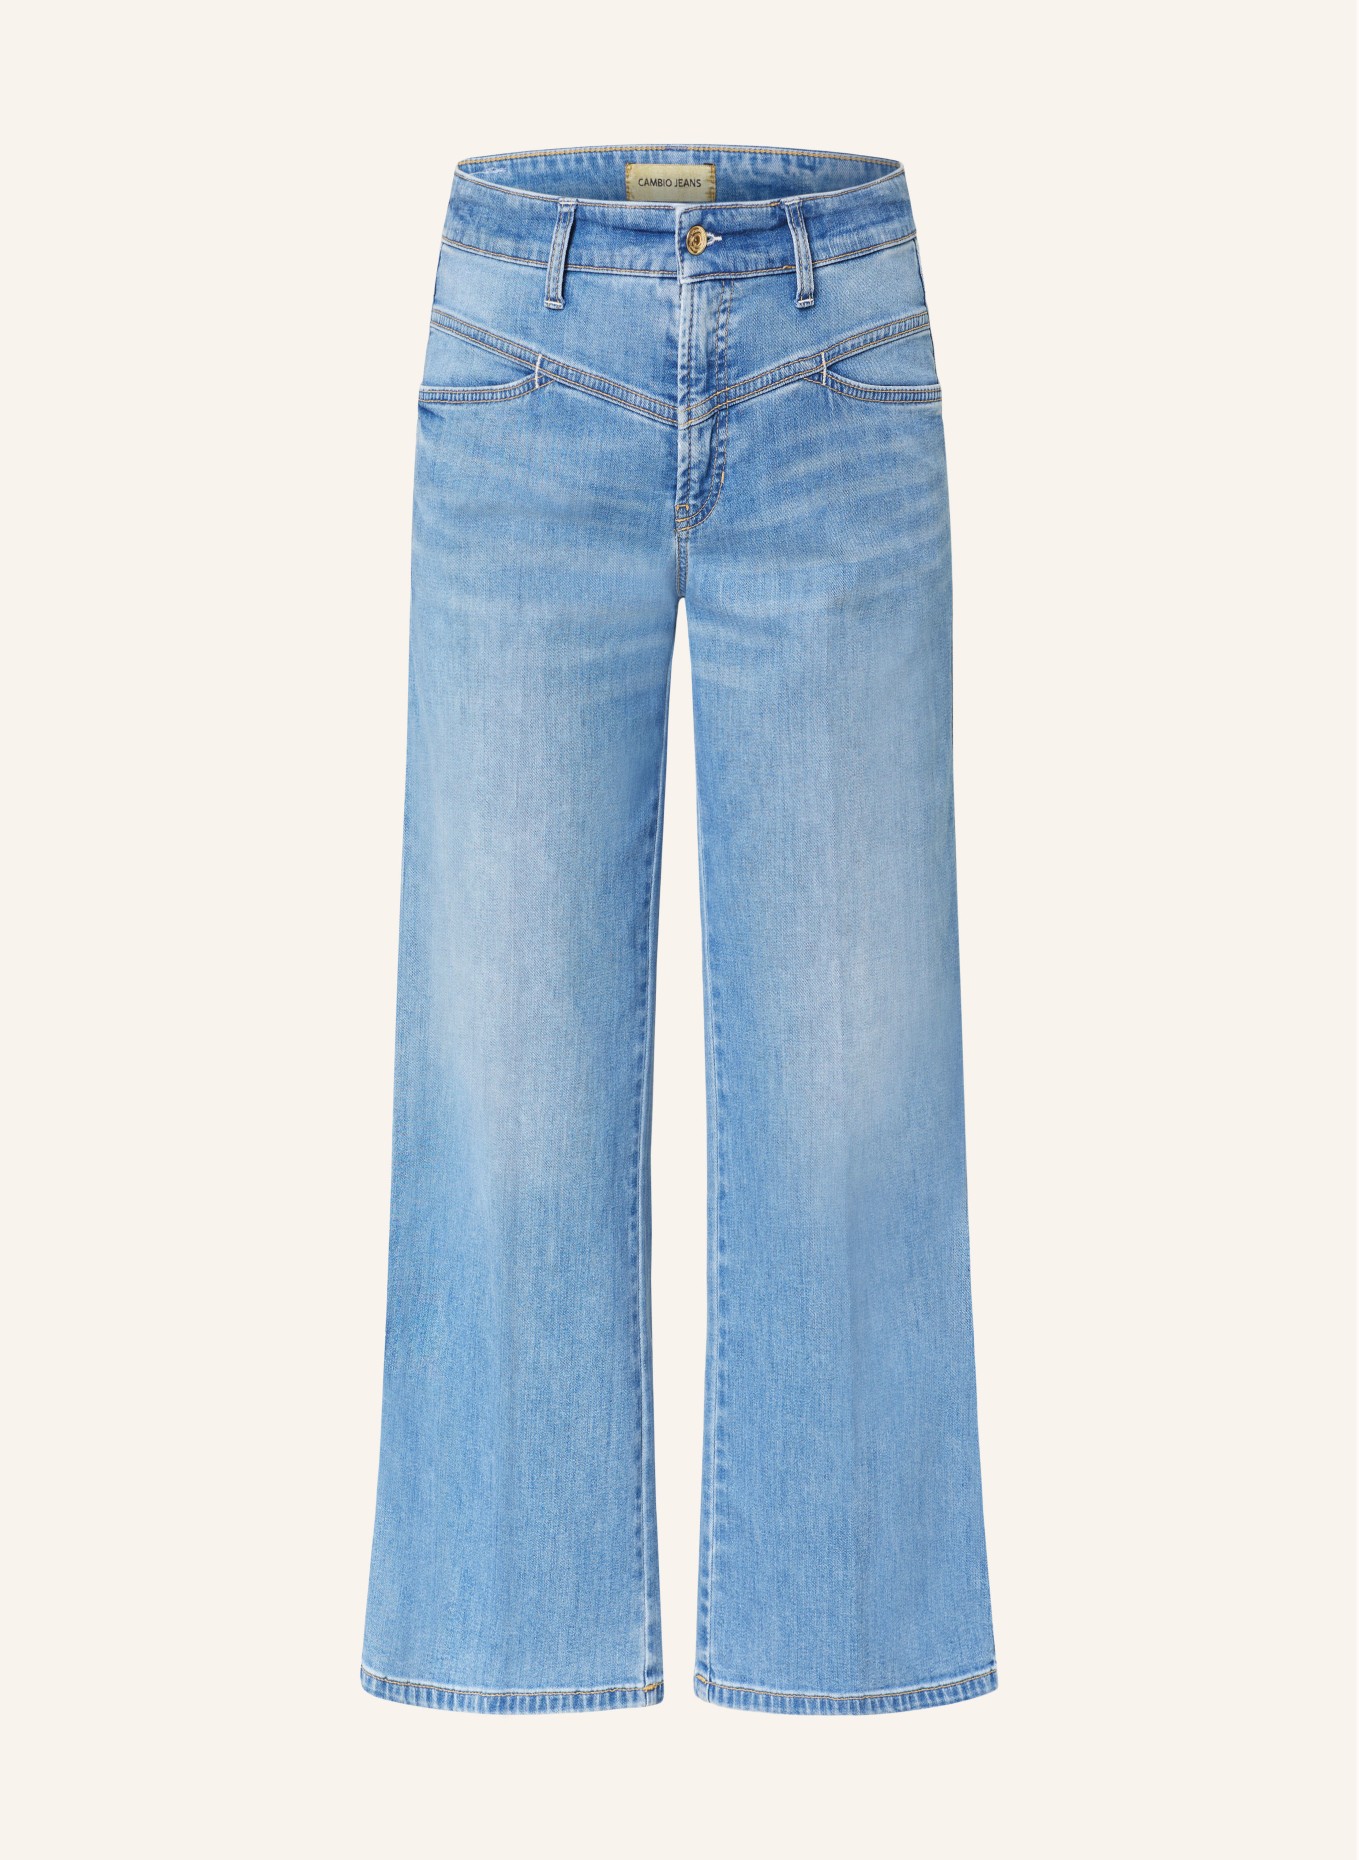 CAMBIO Flared Jeans AIMEE, Farbe: 5208 sunny mid used splinted (Bild 1)